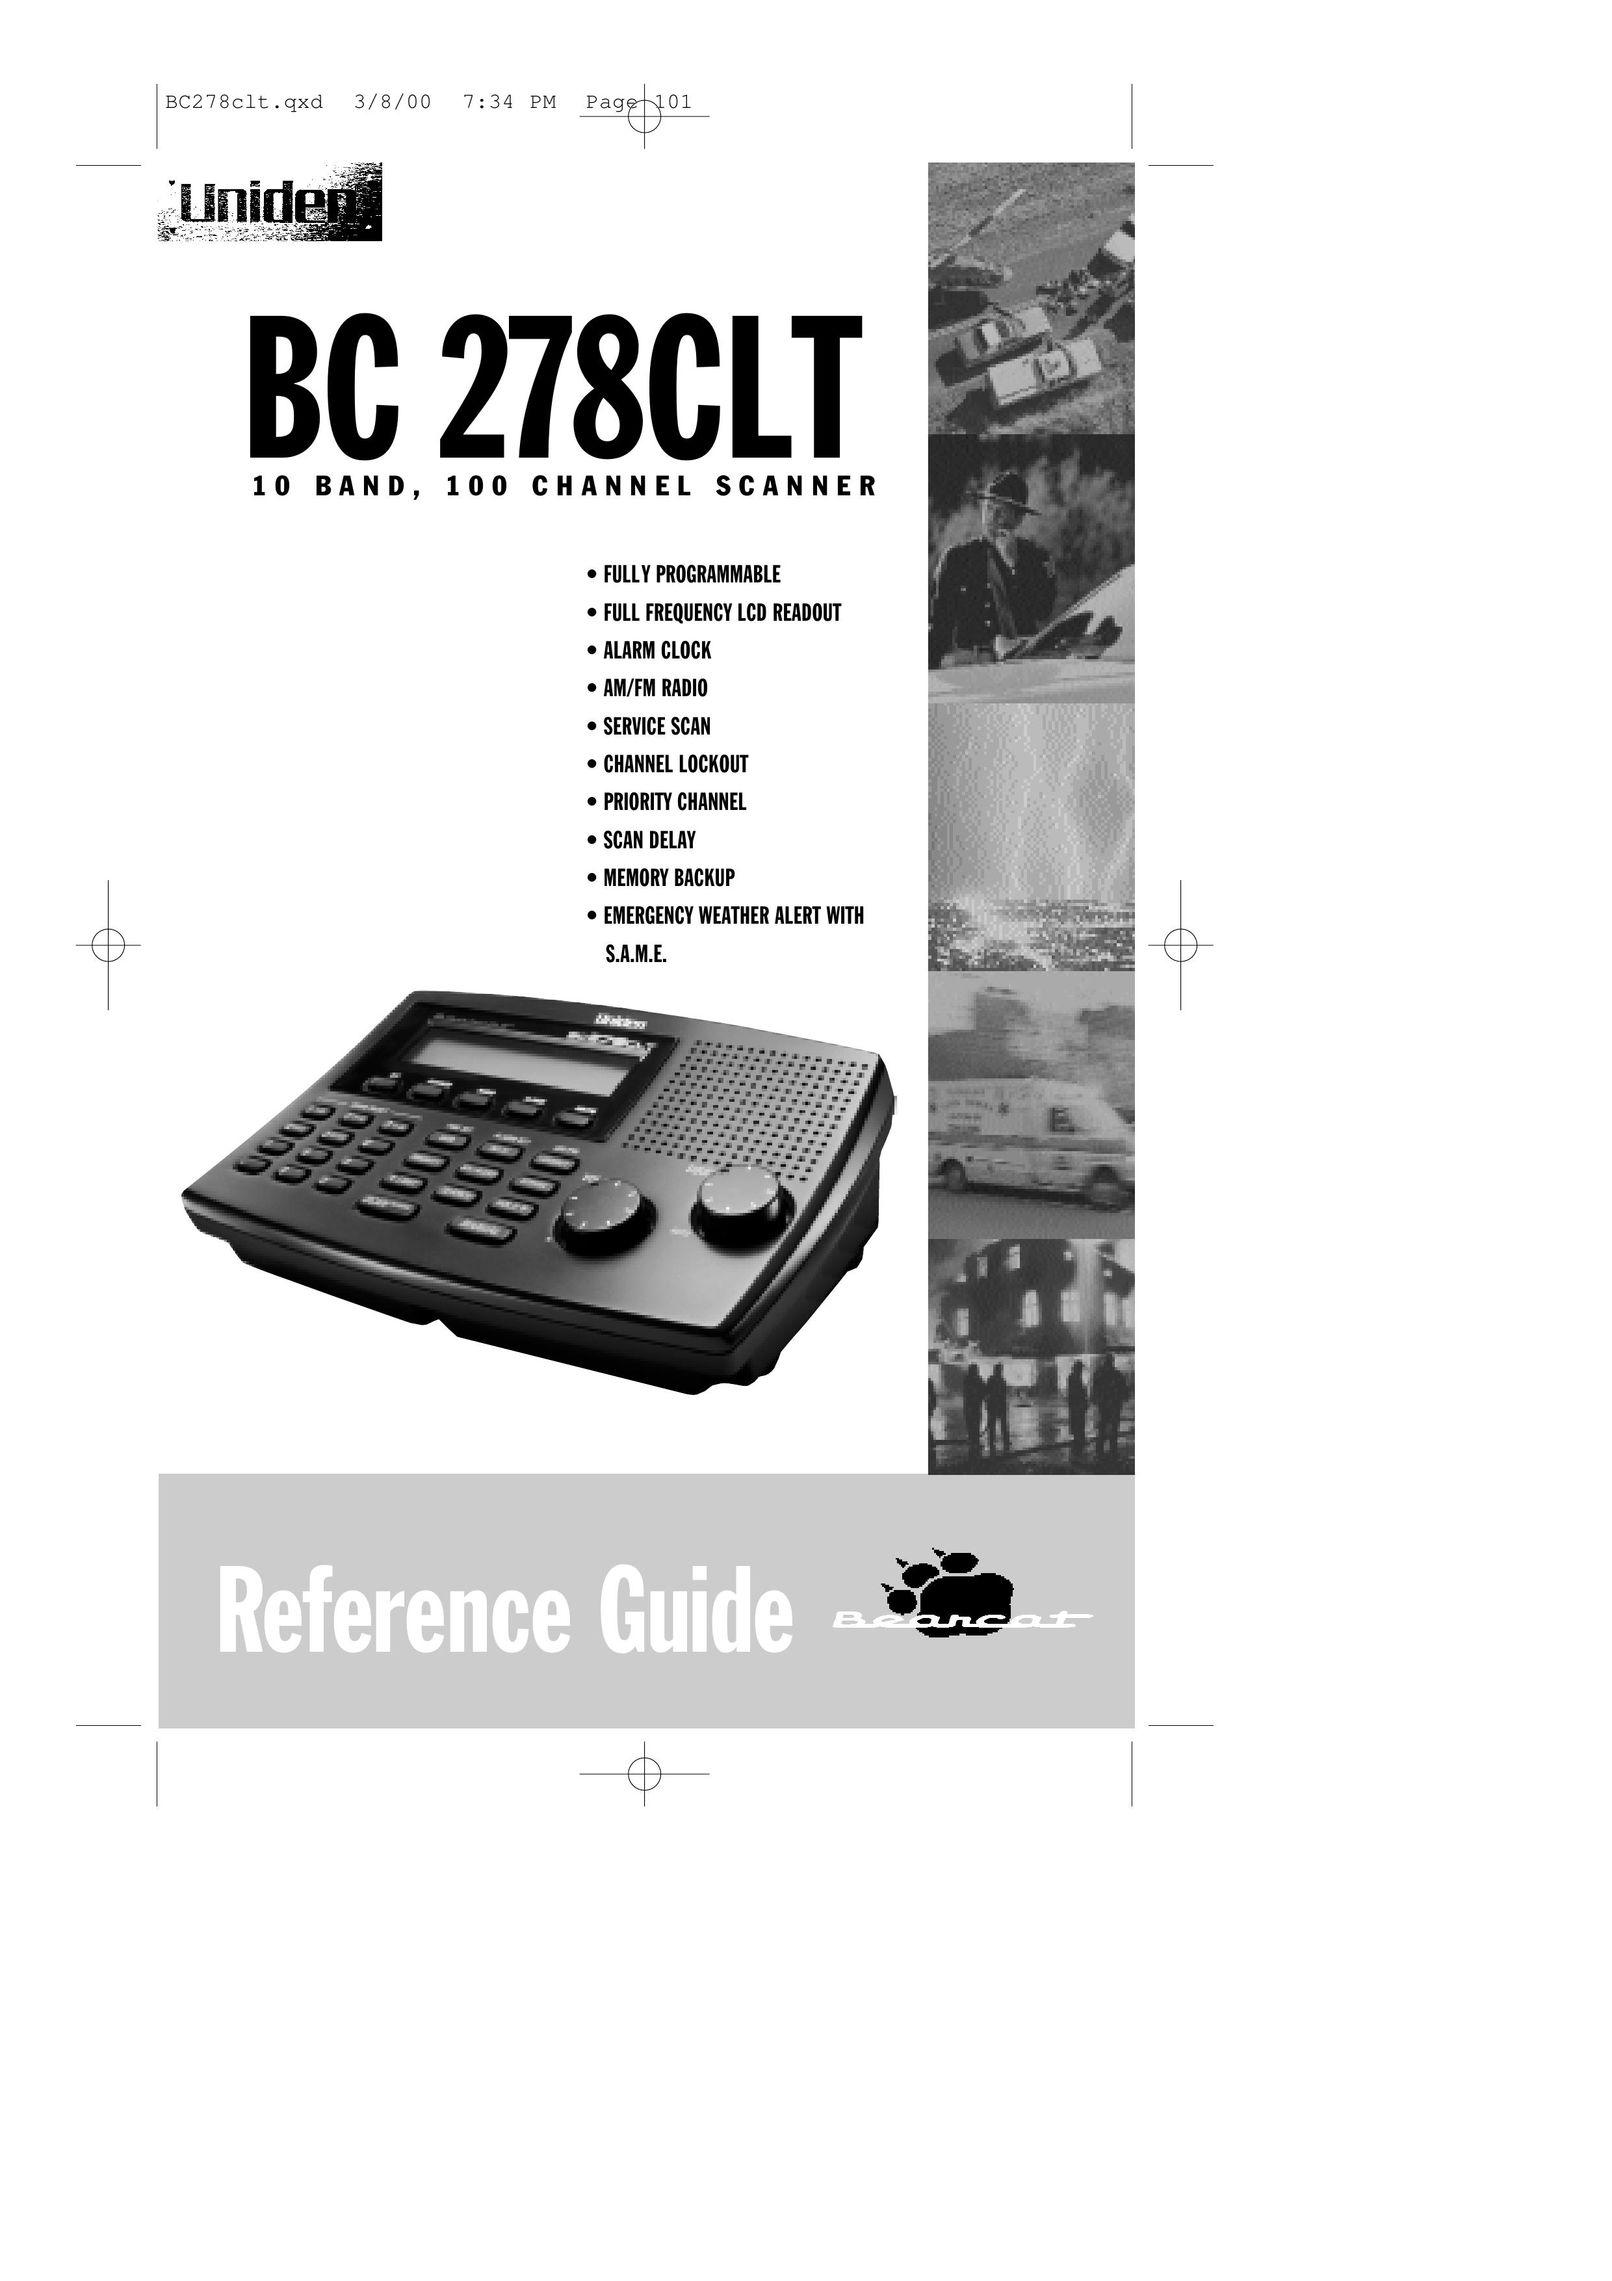 Uniden BC 278CLT Cooktop User Manual